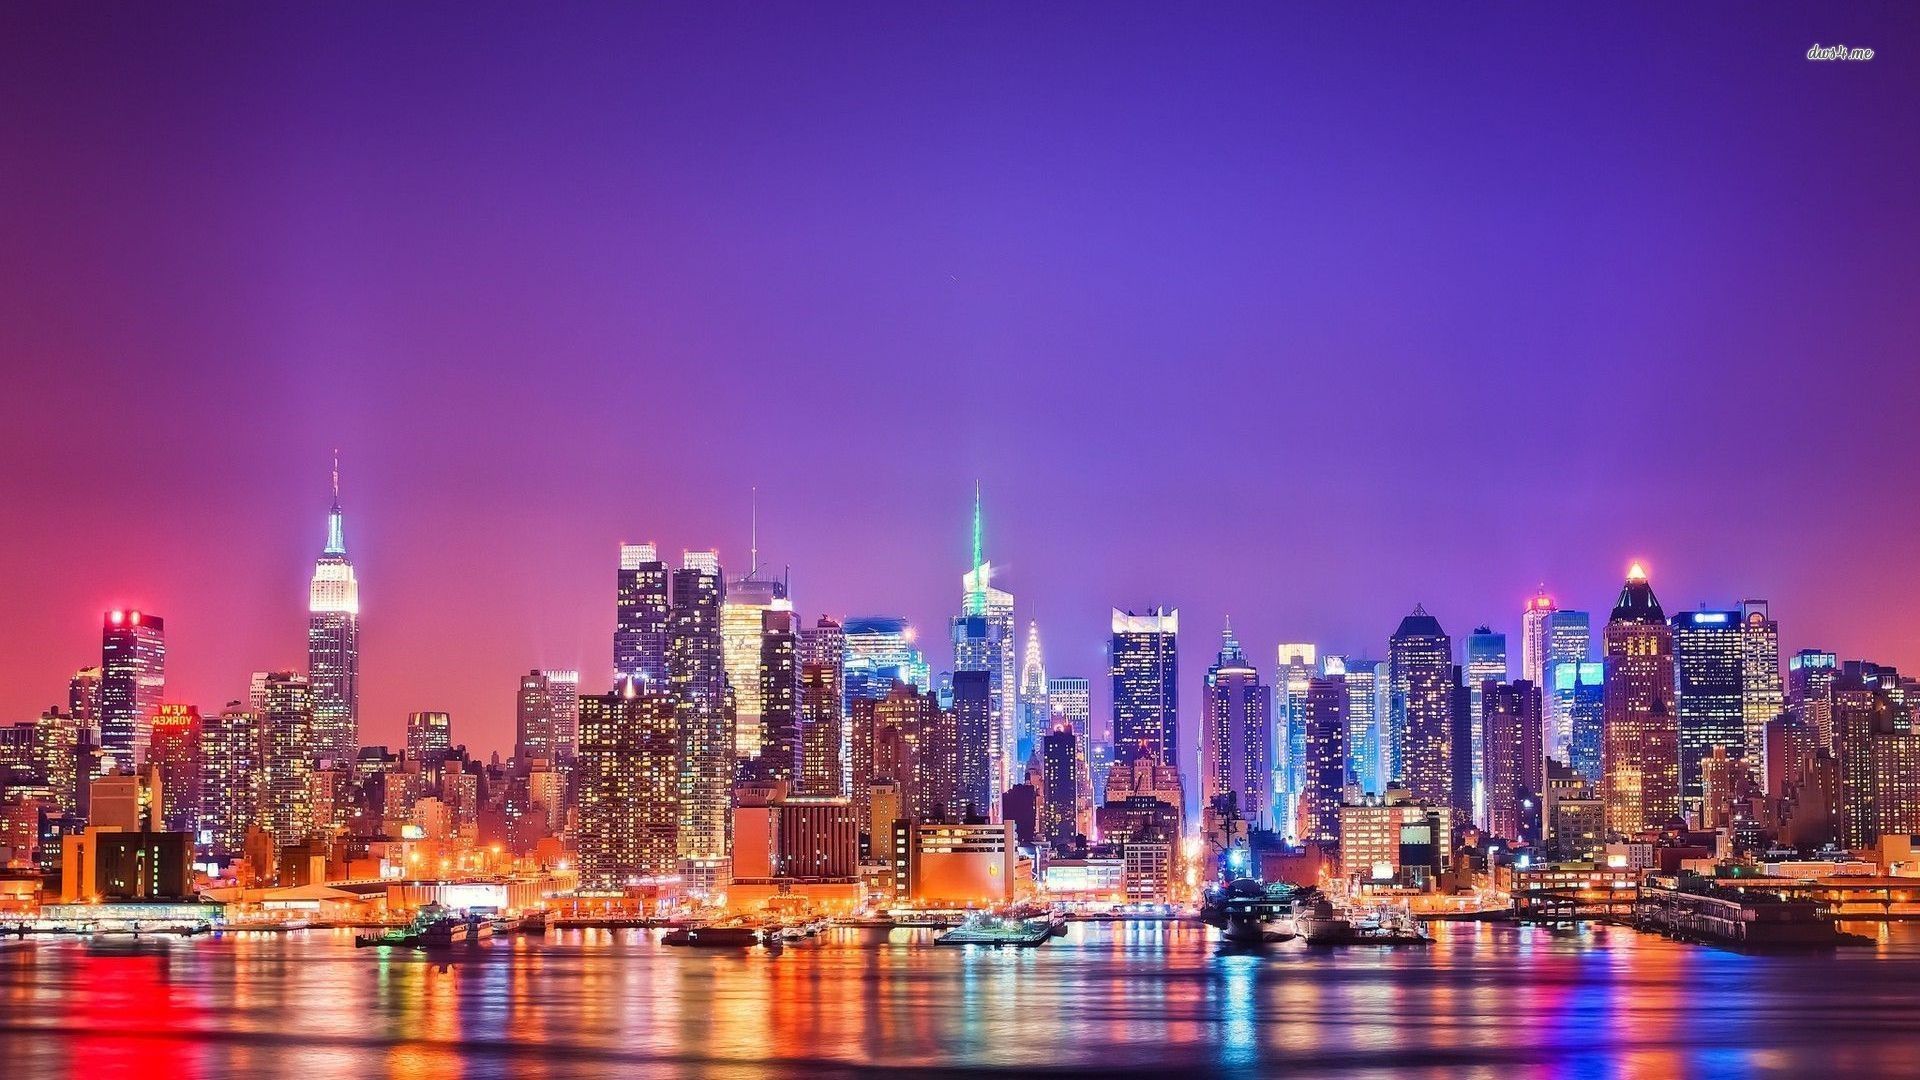 New York Skyline Wallpaper background picture